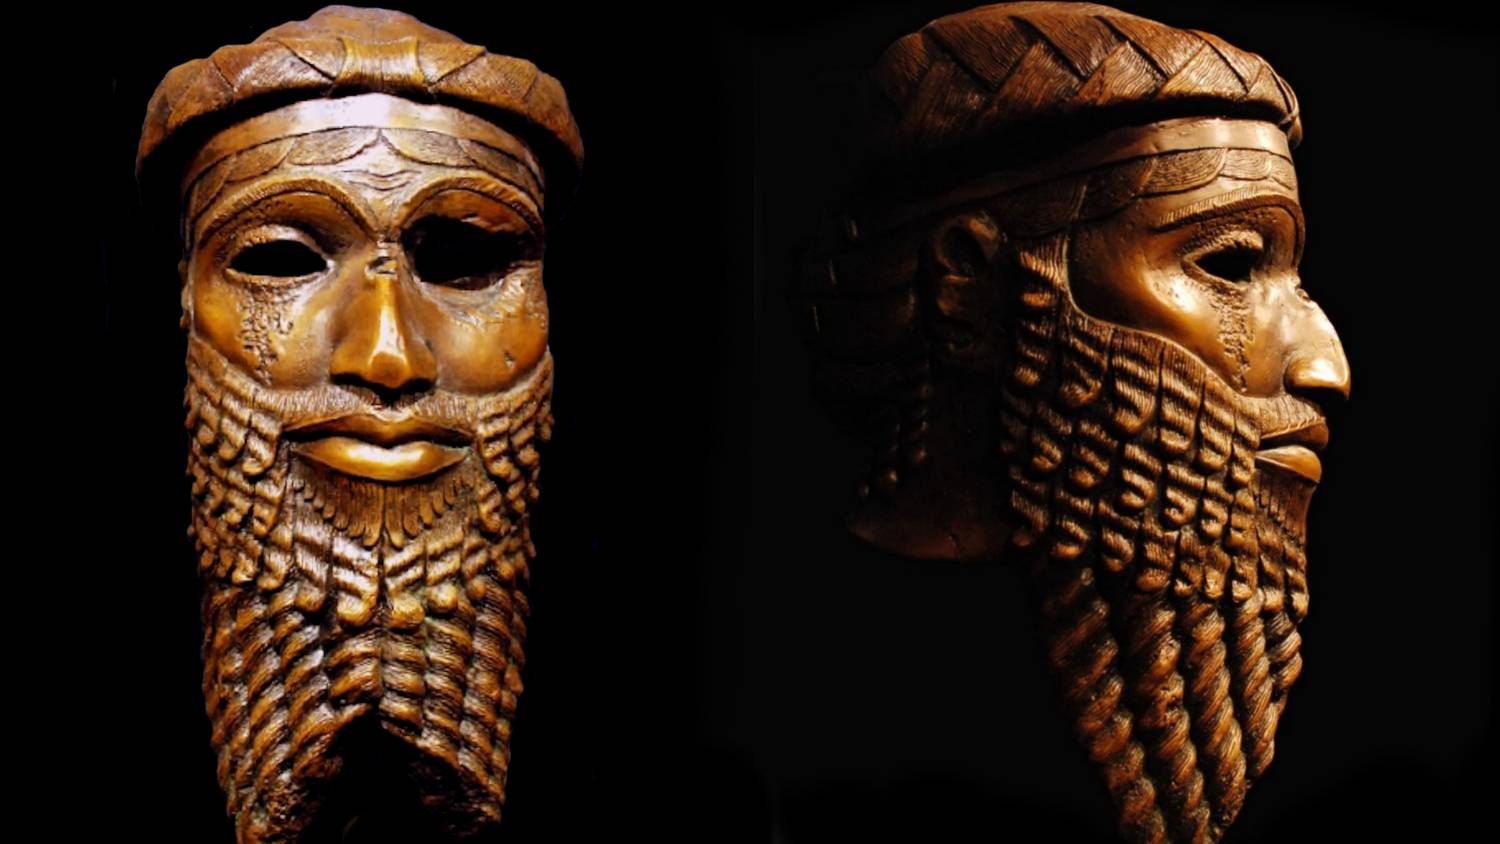 Masque de Sargon d’Akkad, premier souverain de l’empire akkadien (Wikimedia)